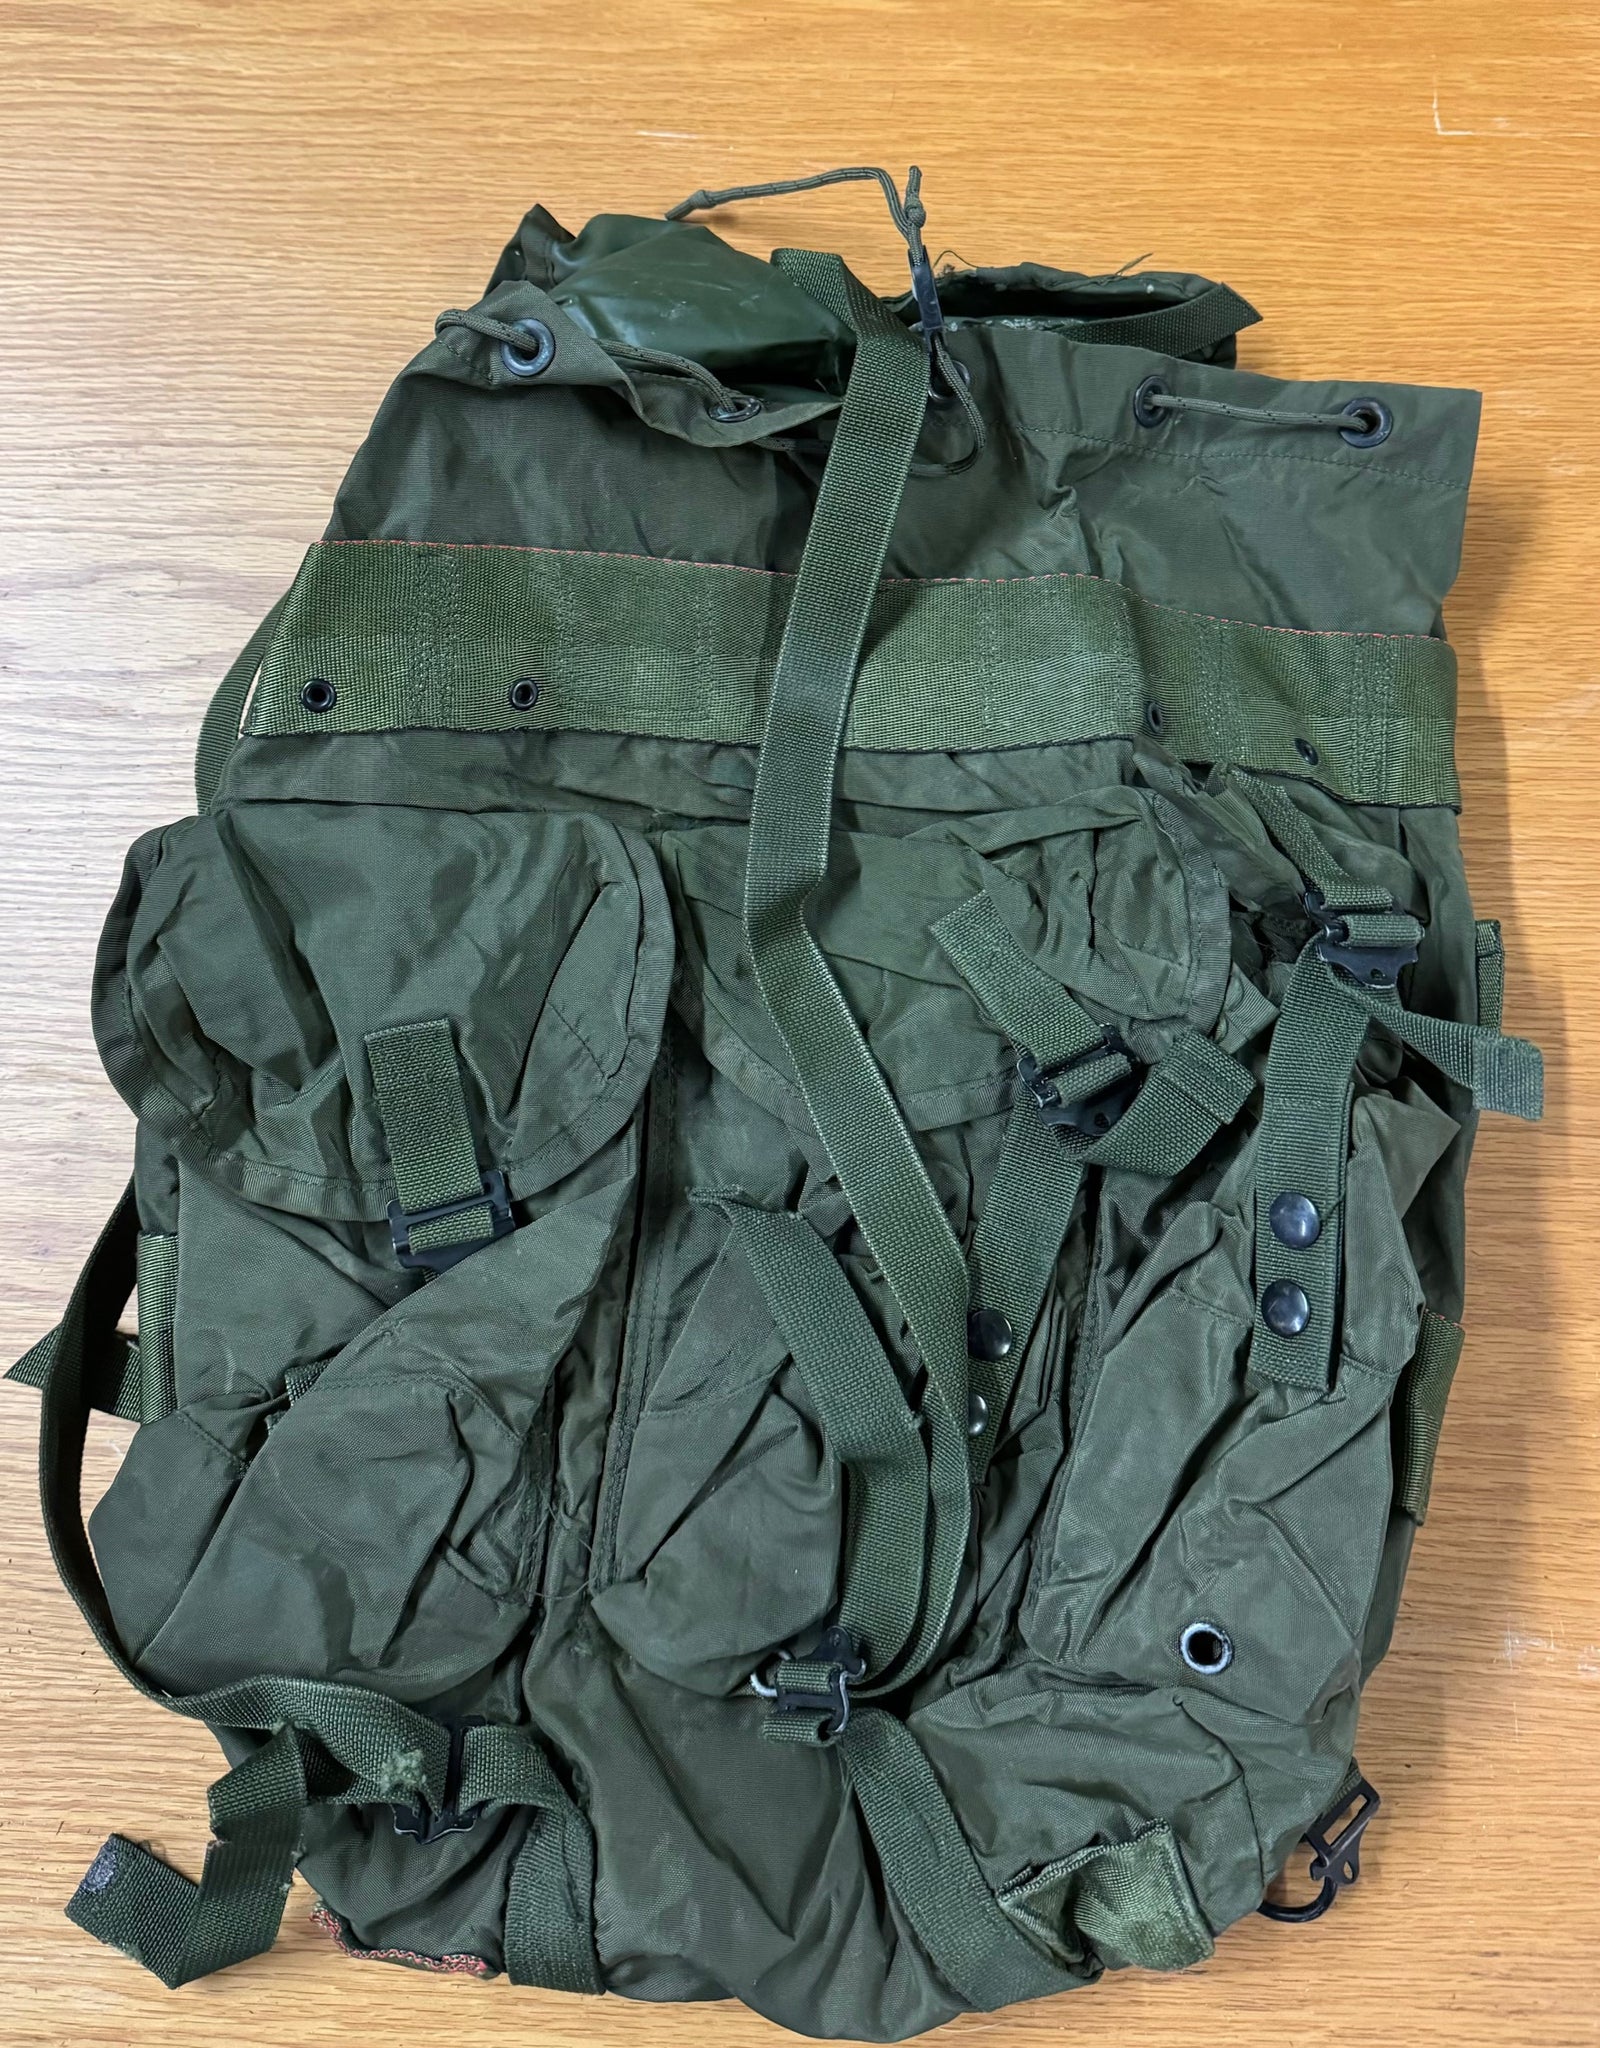 Meret SAVIOR7 PRO Combat Trauma Backpack - w/ Armor & Mods | Live Action  Safety